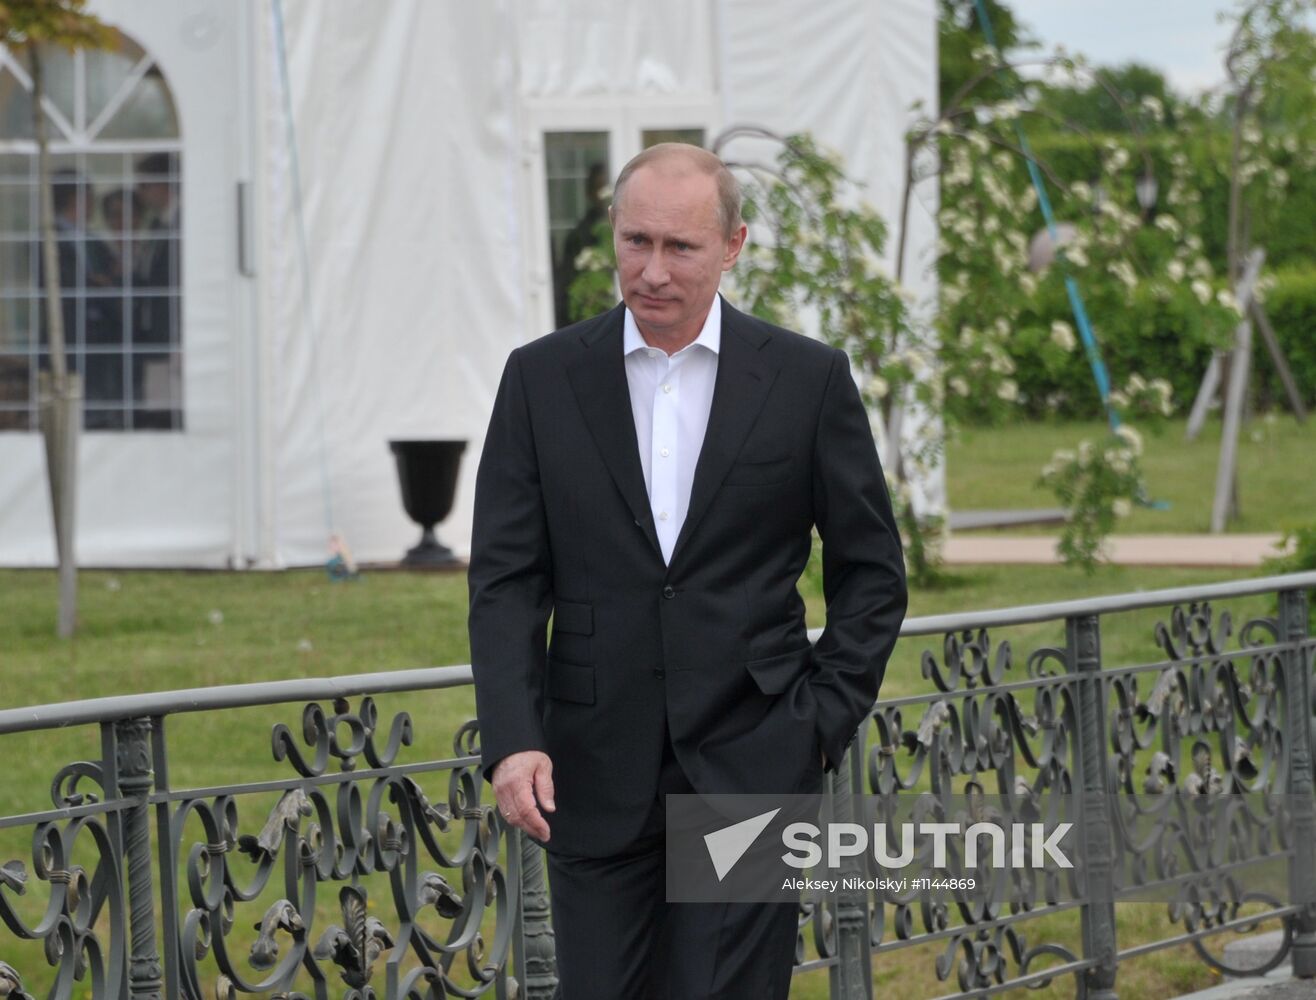 Vladimir Putin meets EU leaders in Strelna